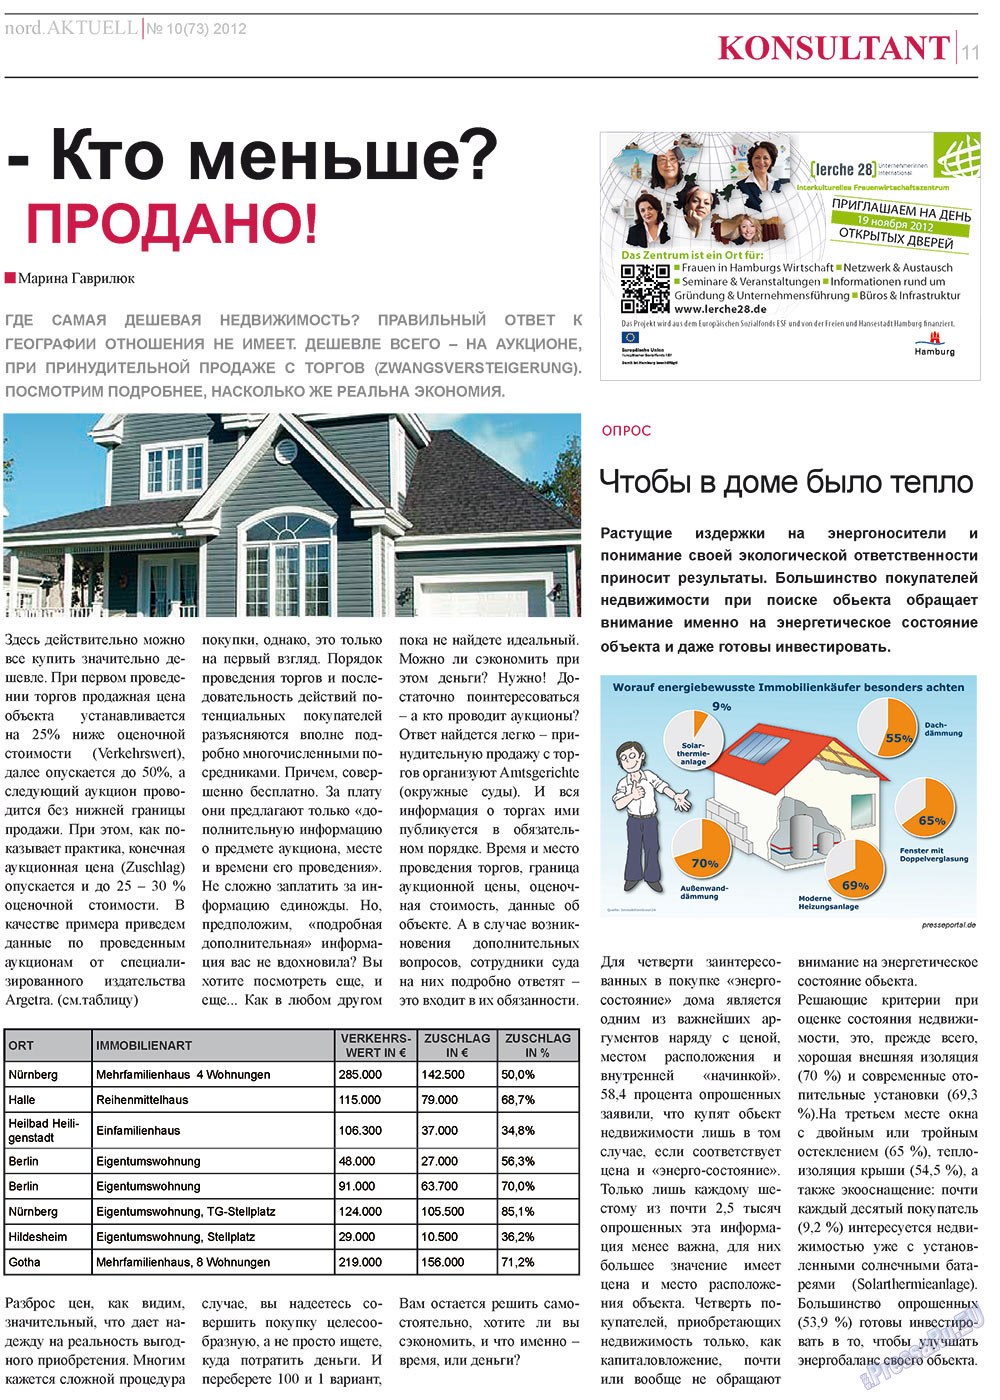 nord.Aktuell, газета. 2012 №10 стр.11